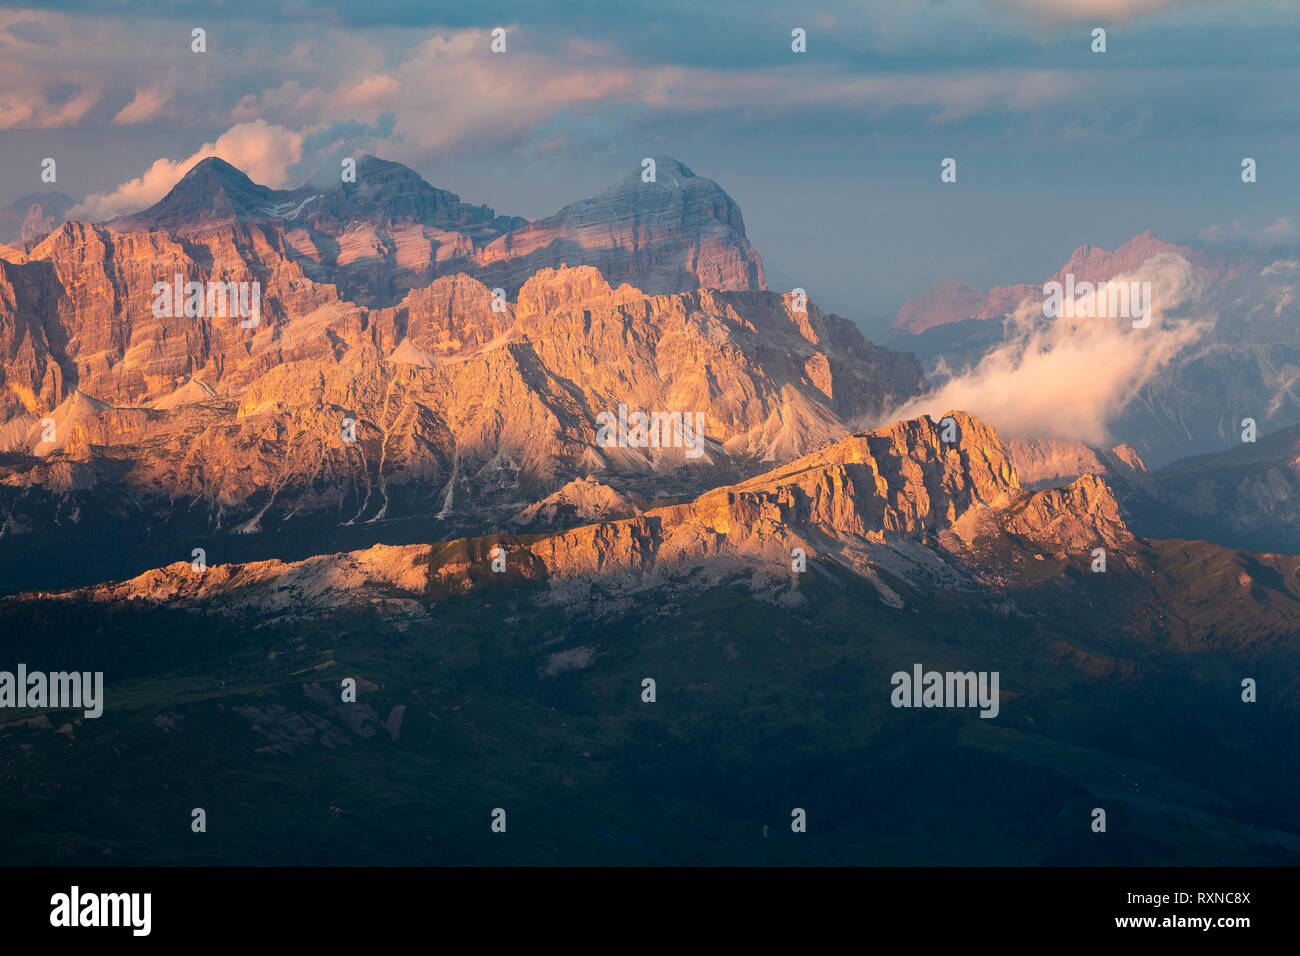 Sonnenlicht bei Sonnenuntergang. Setsas Peaks. Lagazuoi, Gran Lagazuoi, Tofane Mountains. Die Dolomiten. Italienische Alpen. Europa. Stockfoto